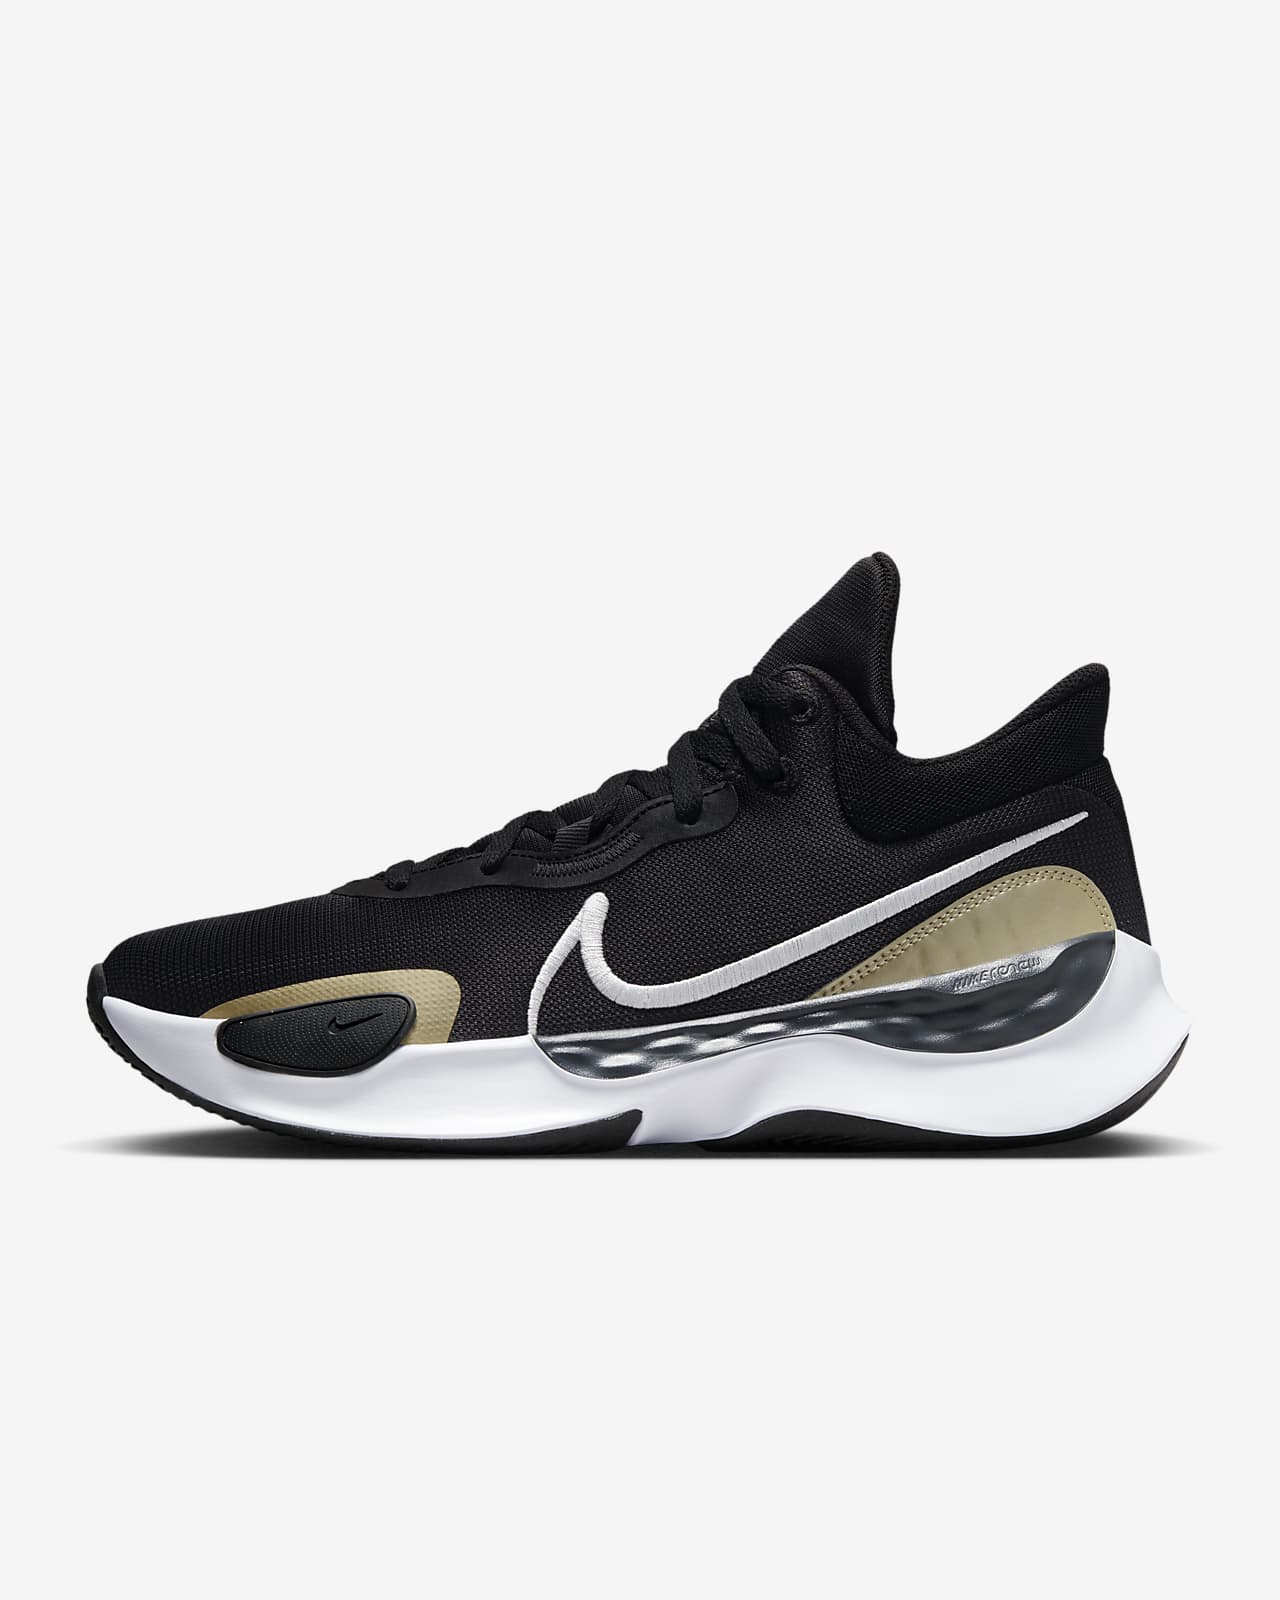 Chaussure de basket Nike Elevate 3